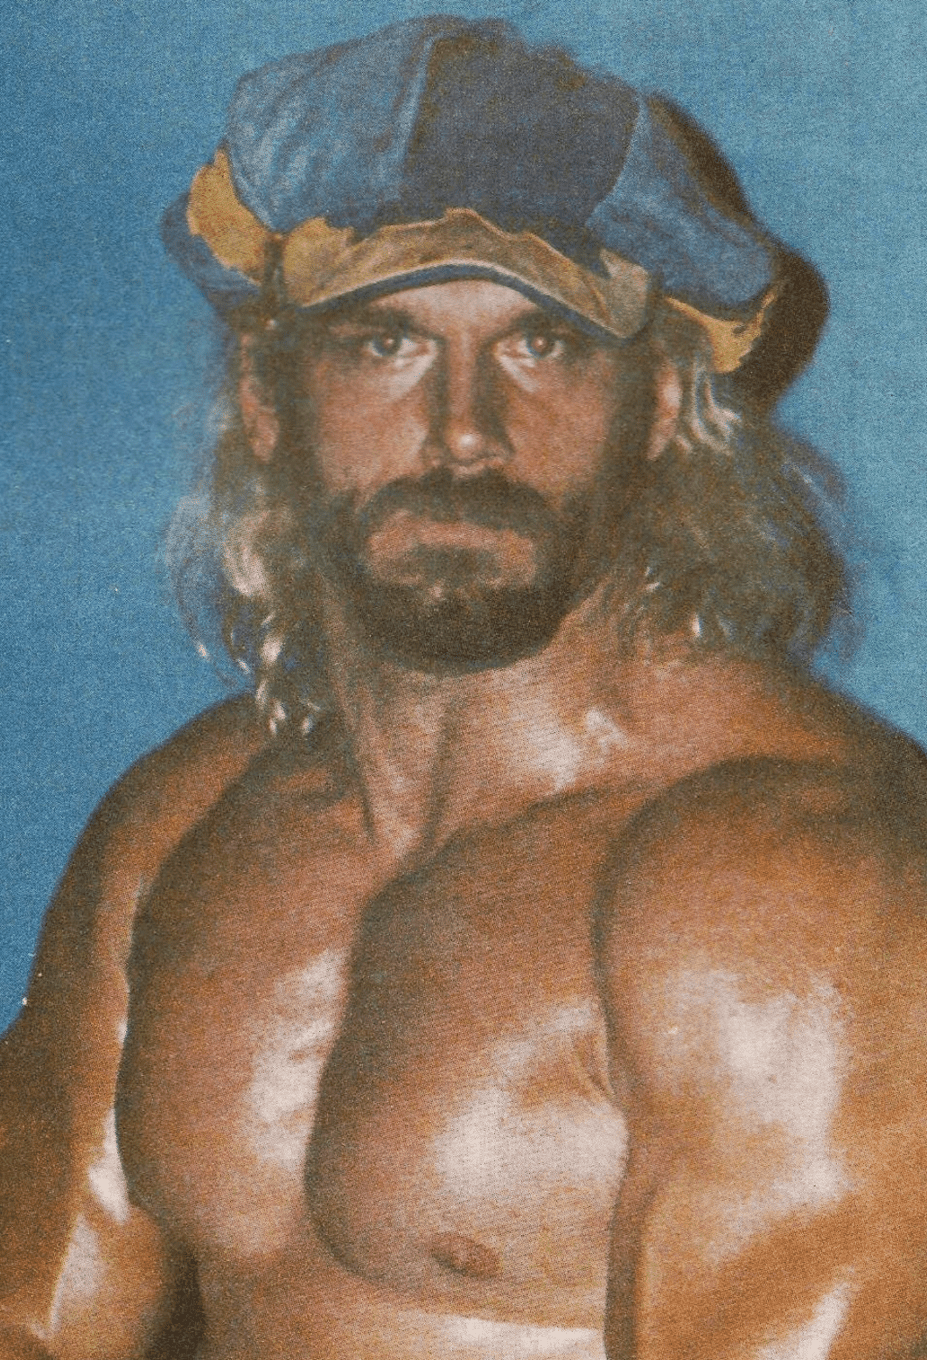 Jesse Ventura wrestler NWA